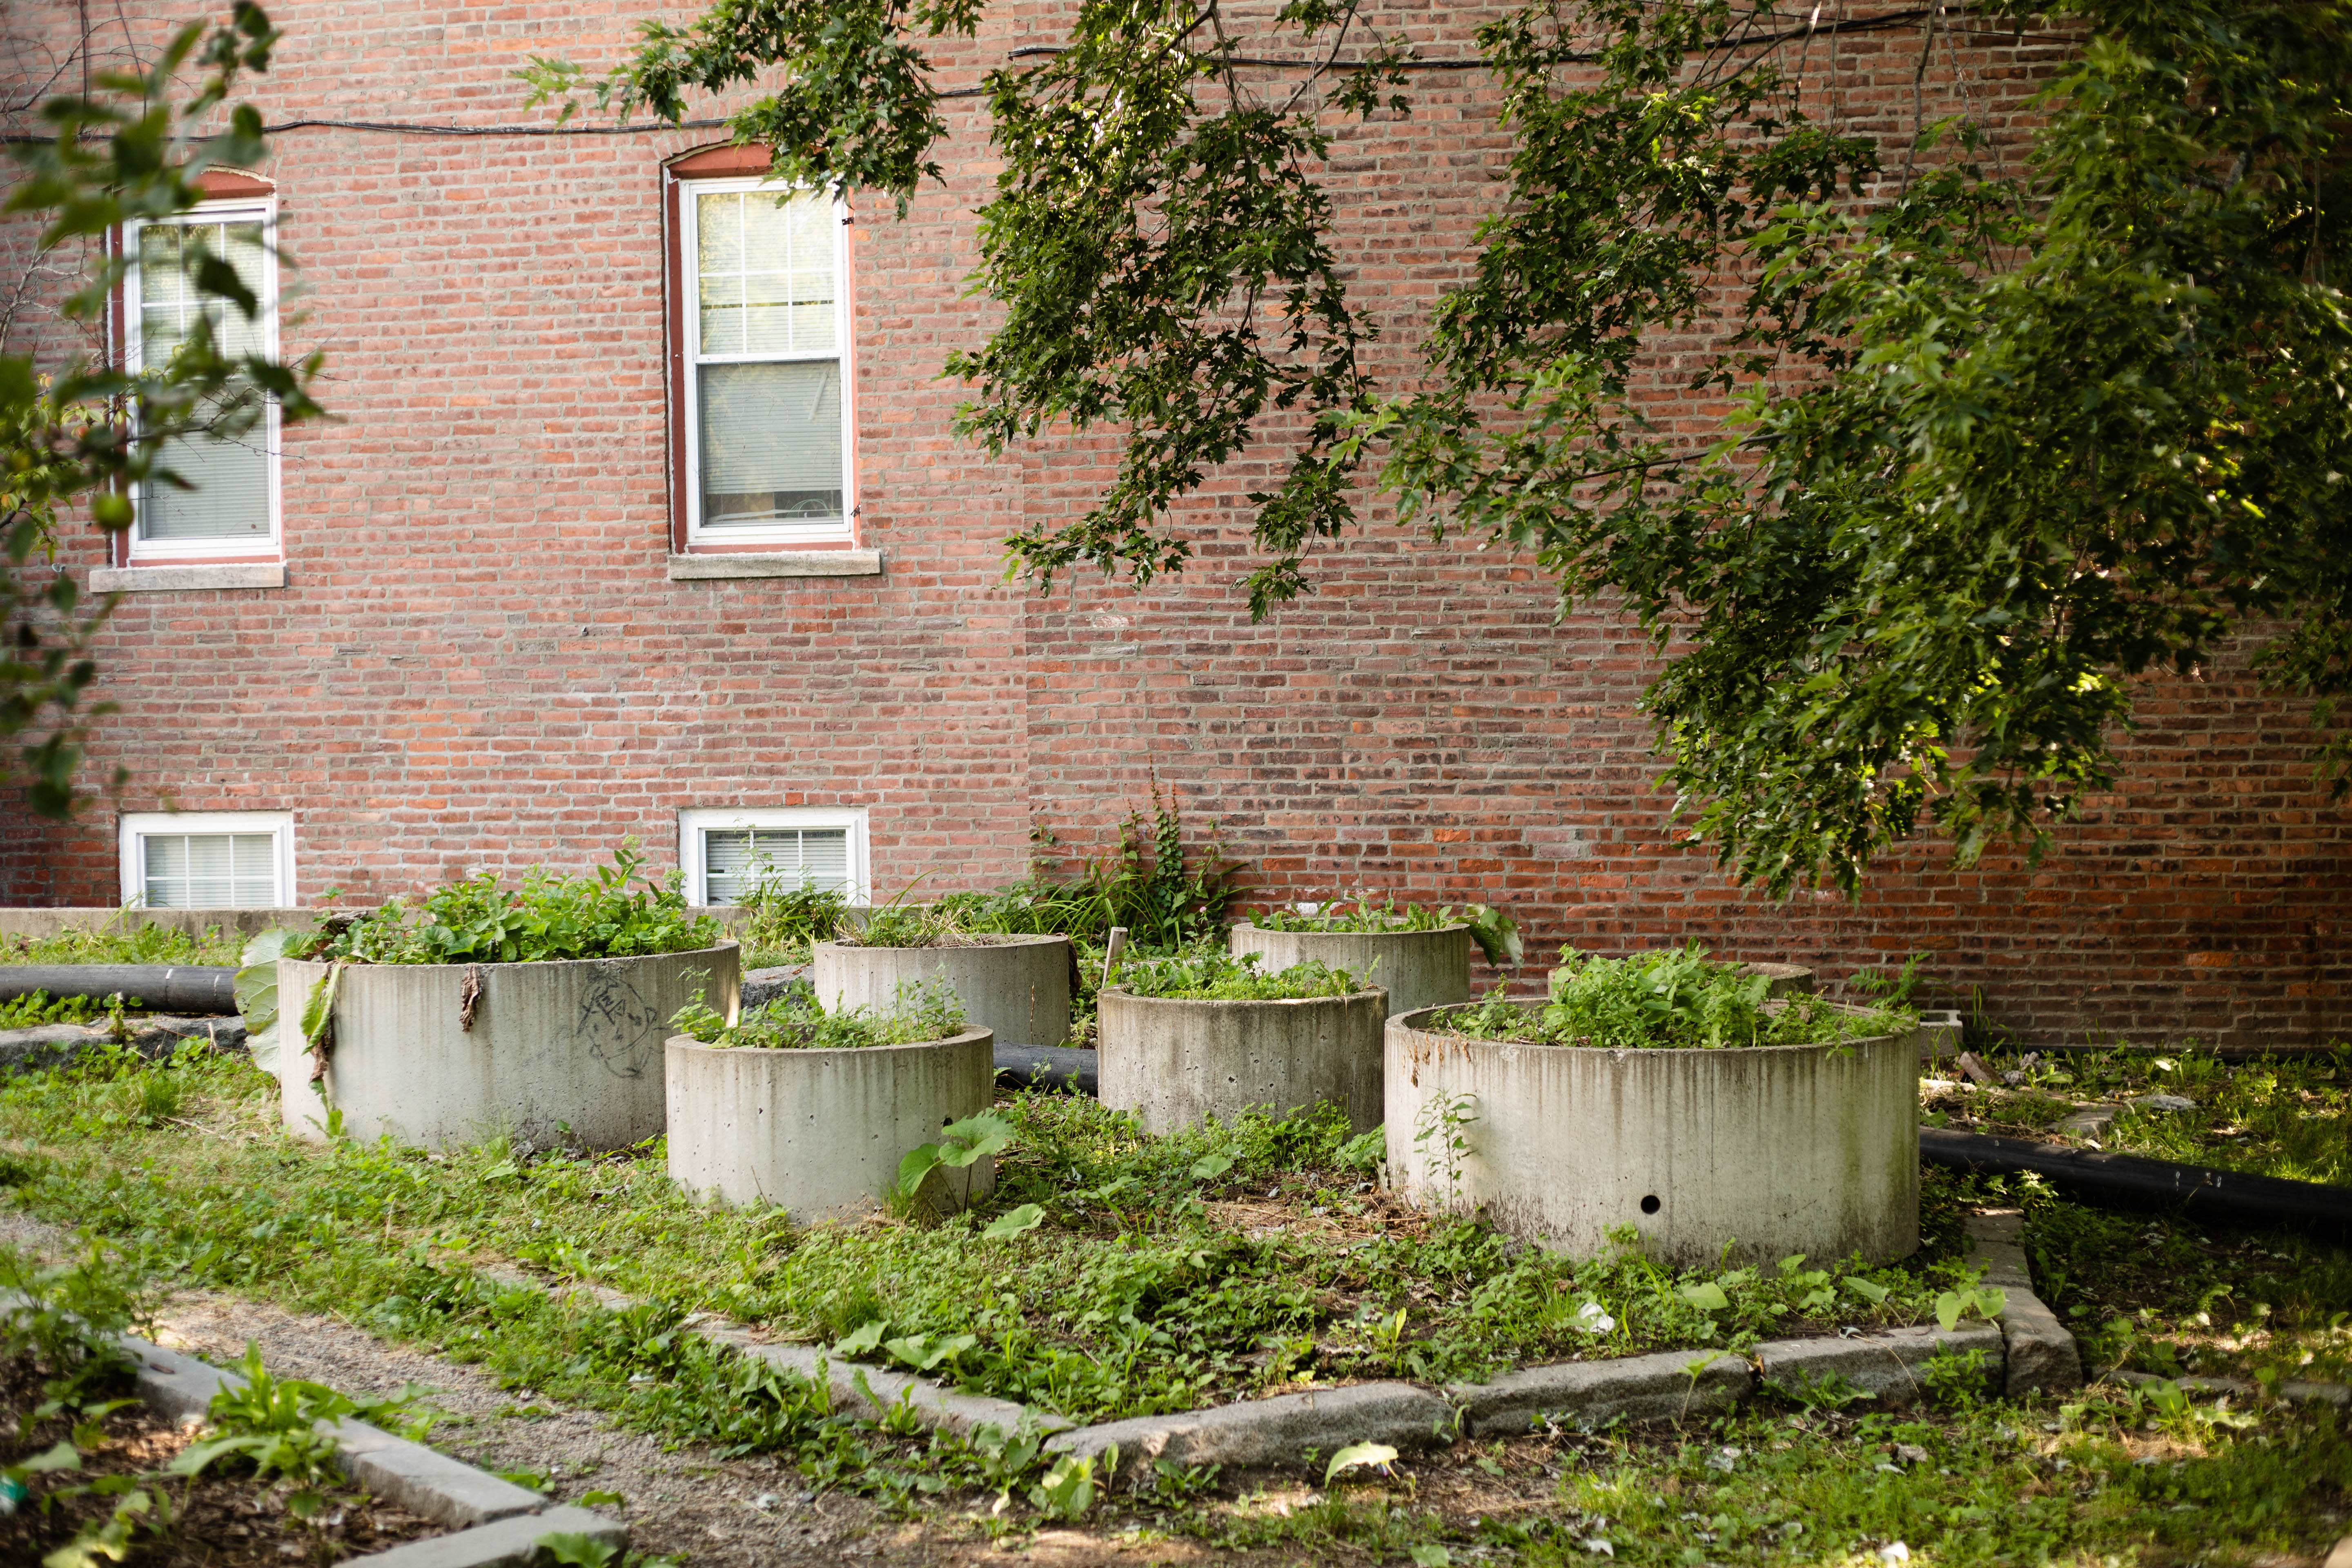 Planters in an urban garden